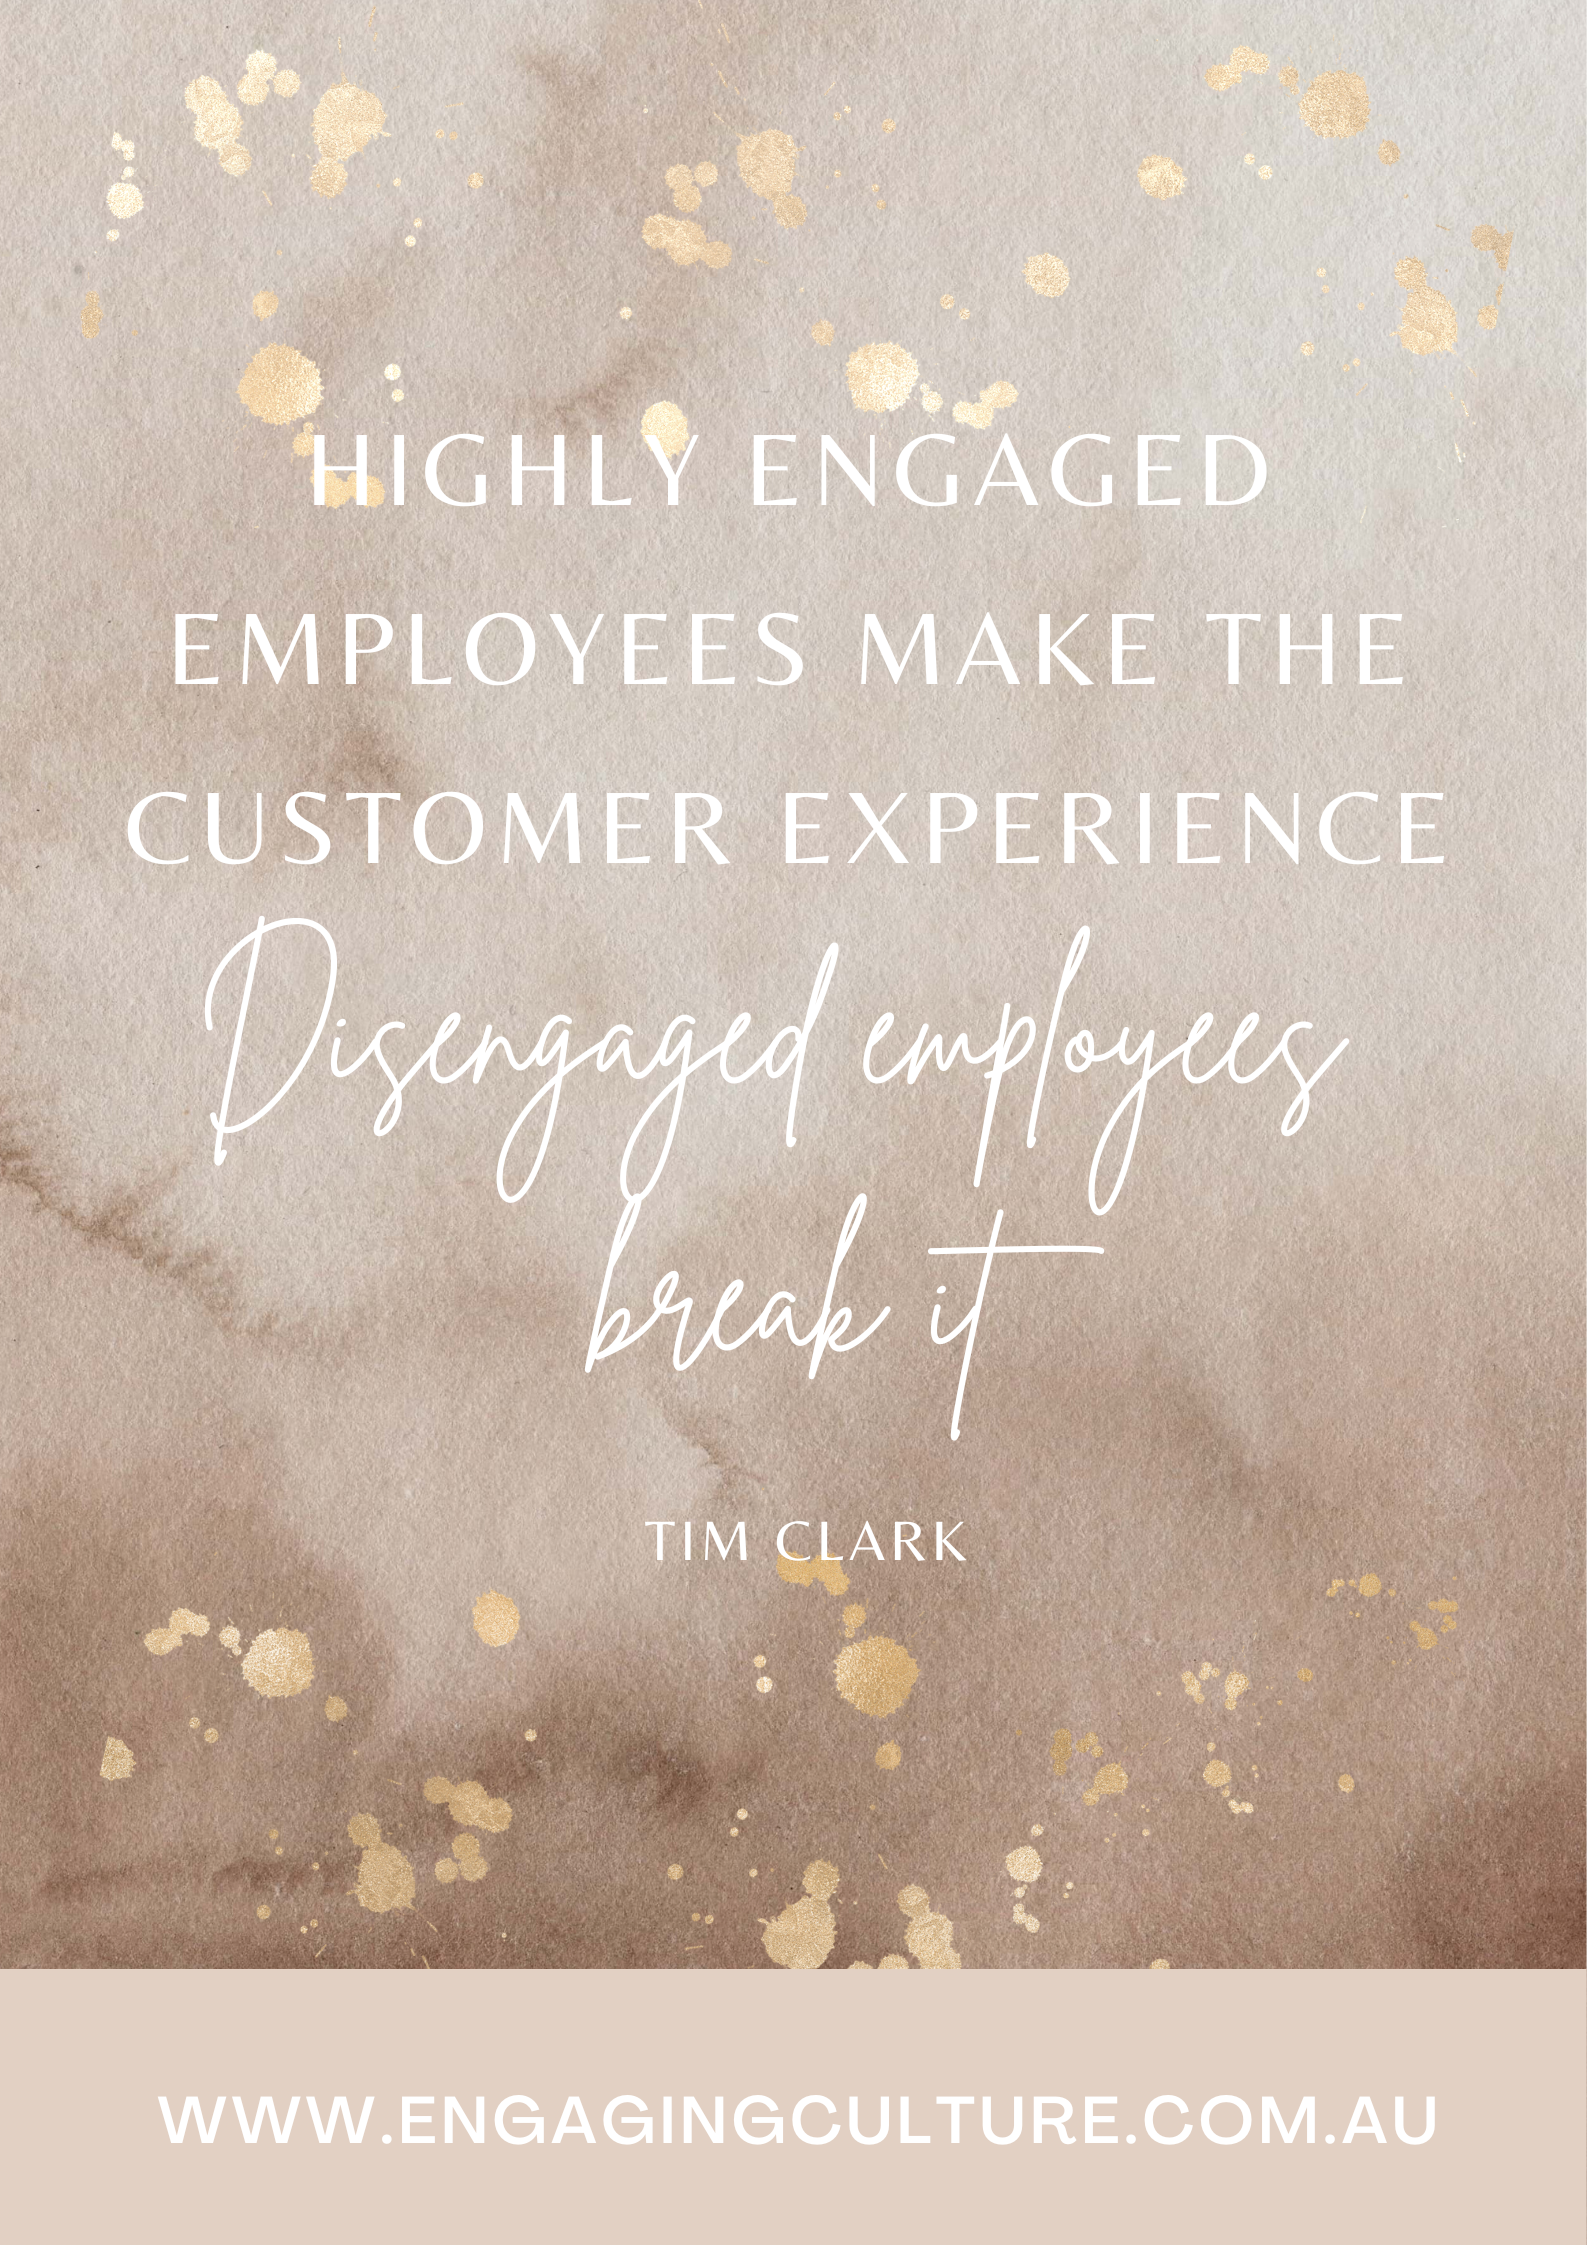 Highly engaged employees make the customer experience. Disengaged employees break it.